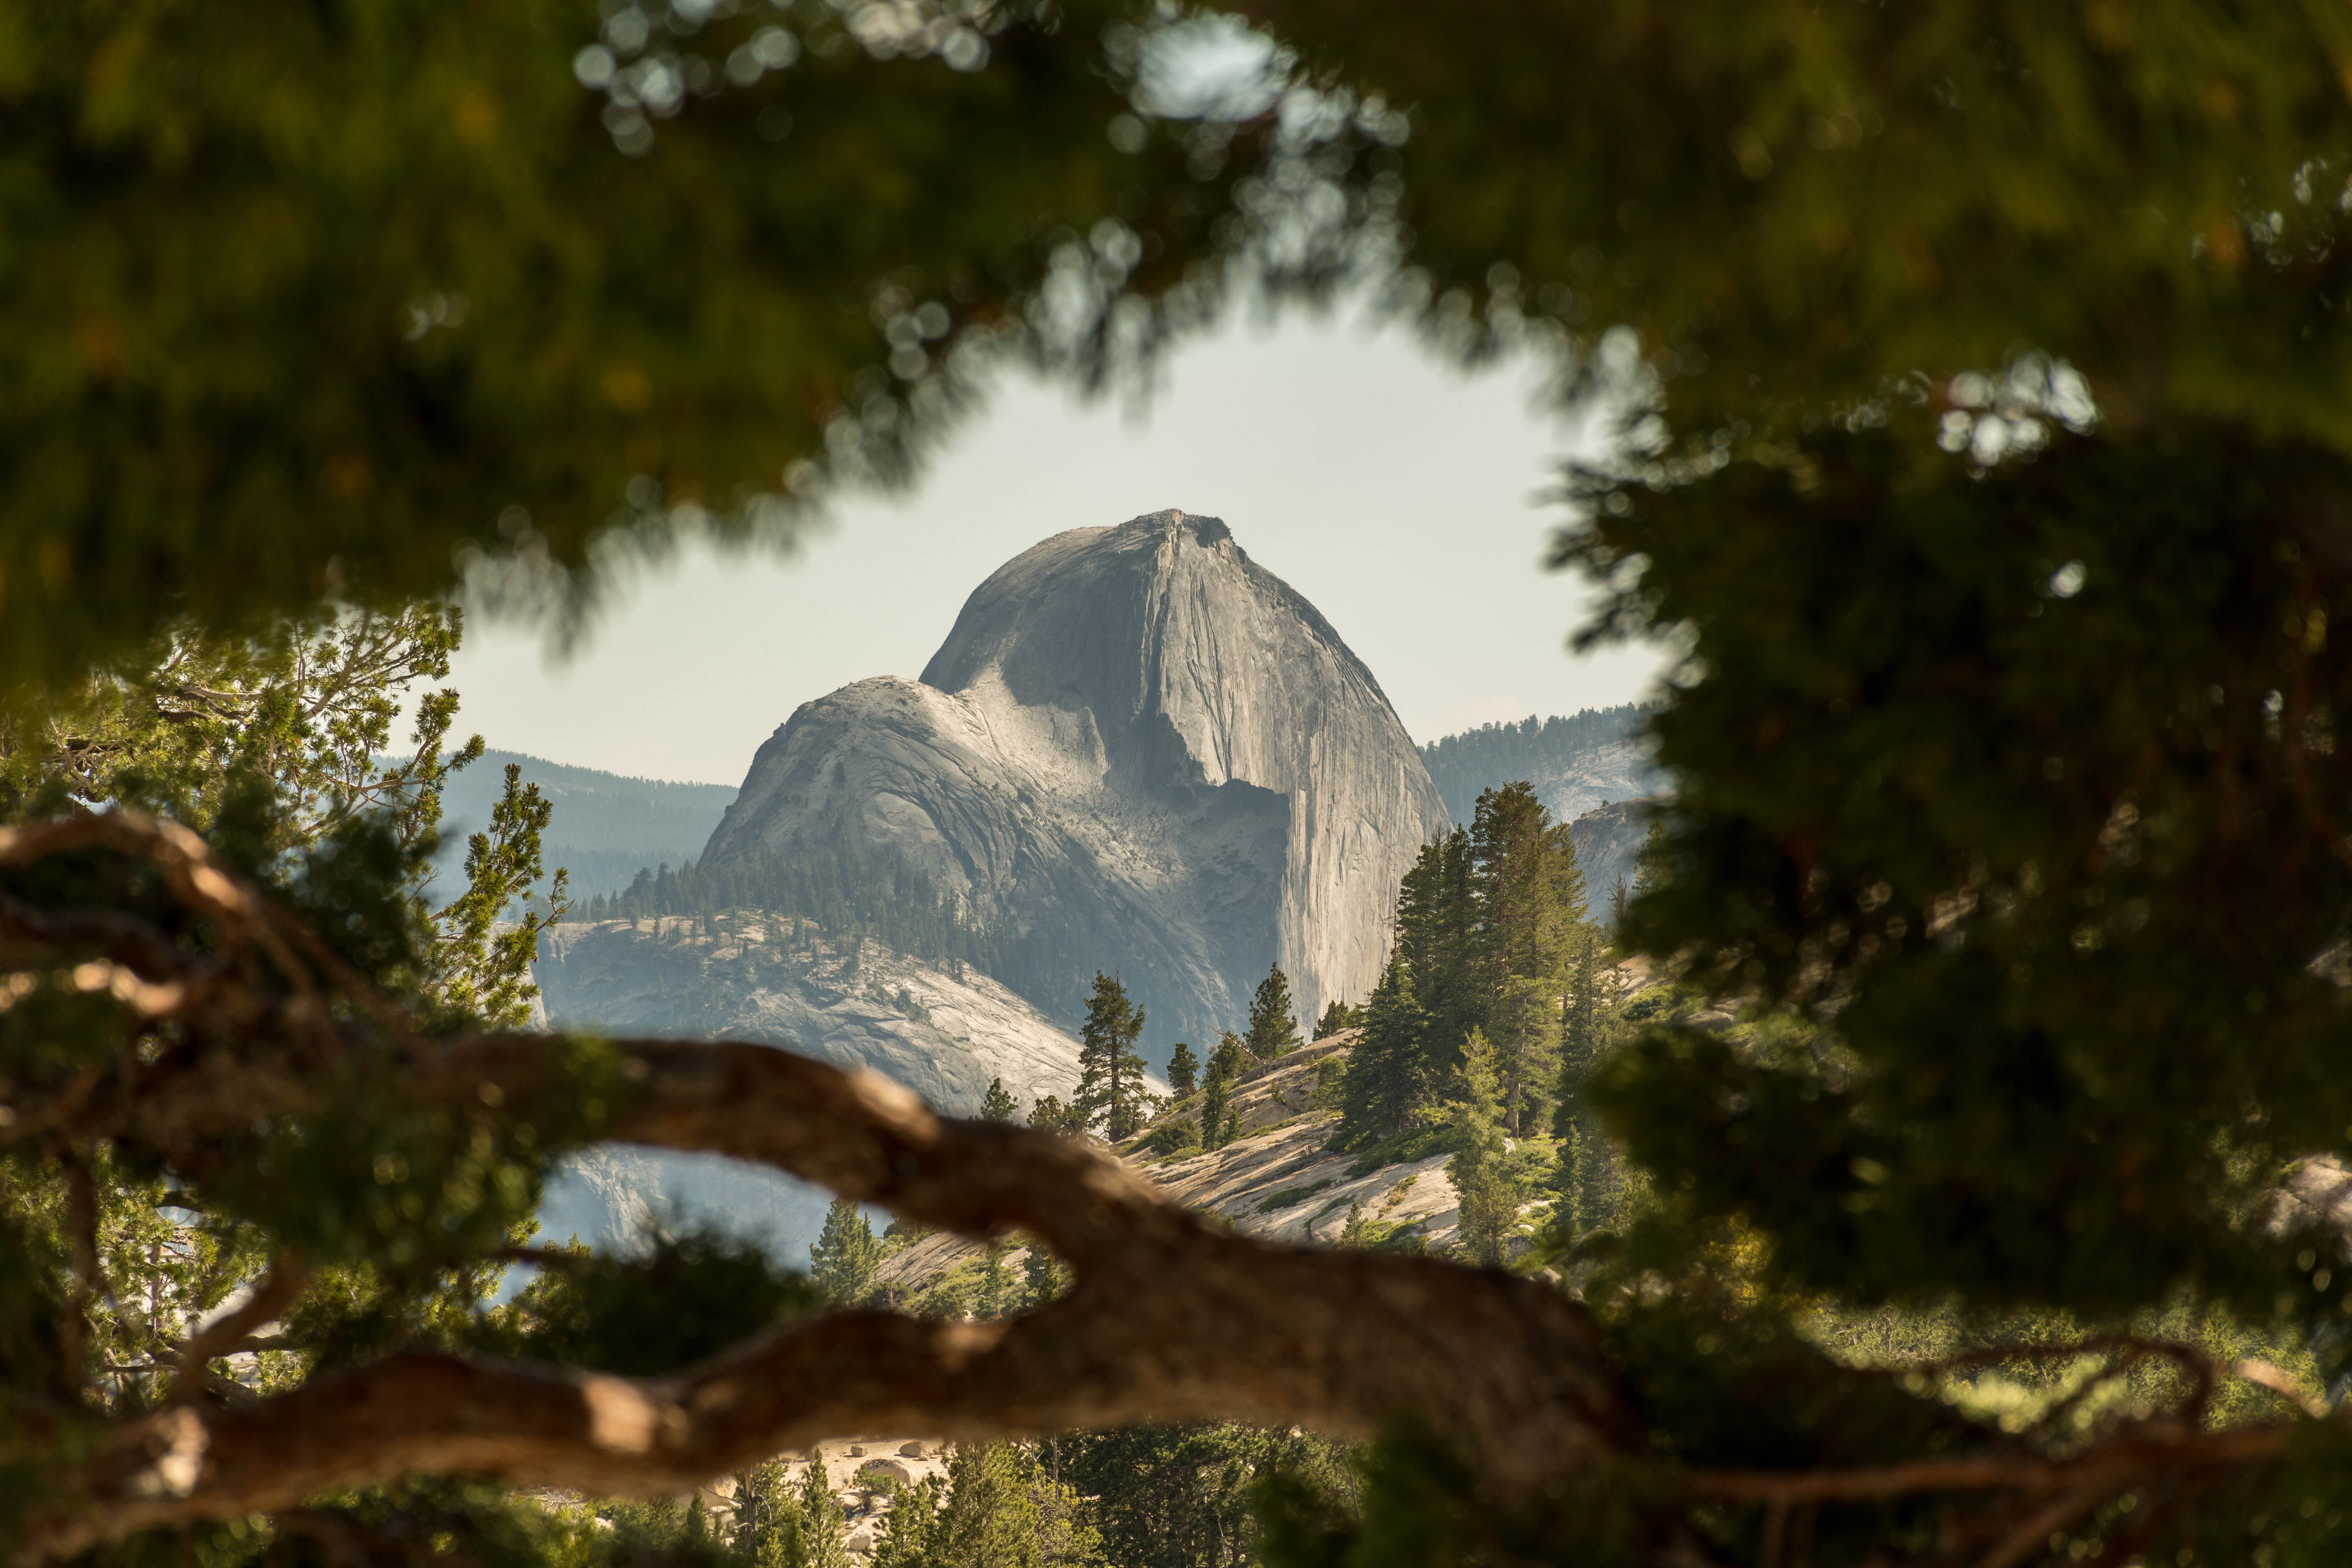 General 6000x4000 Half Dome Yosemite National Park California USA nature rocks rock formation outdoors